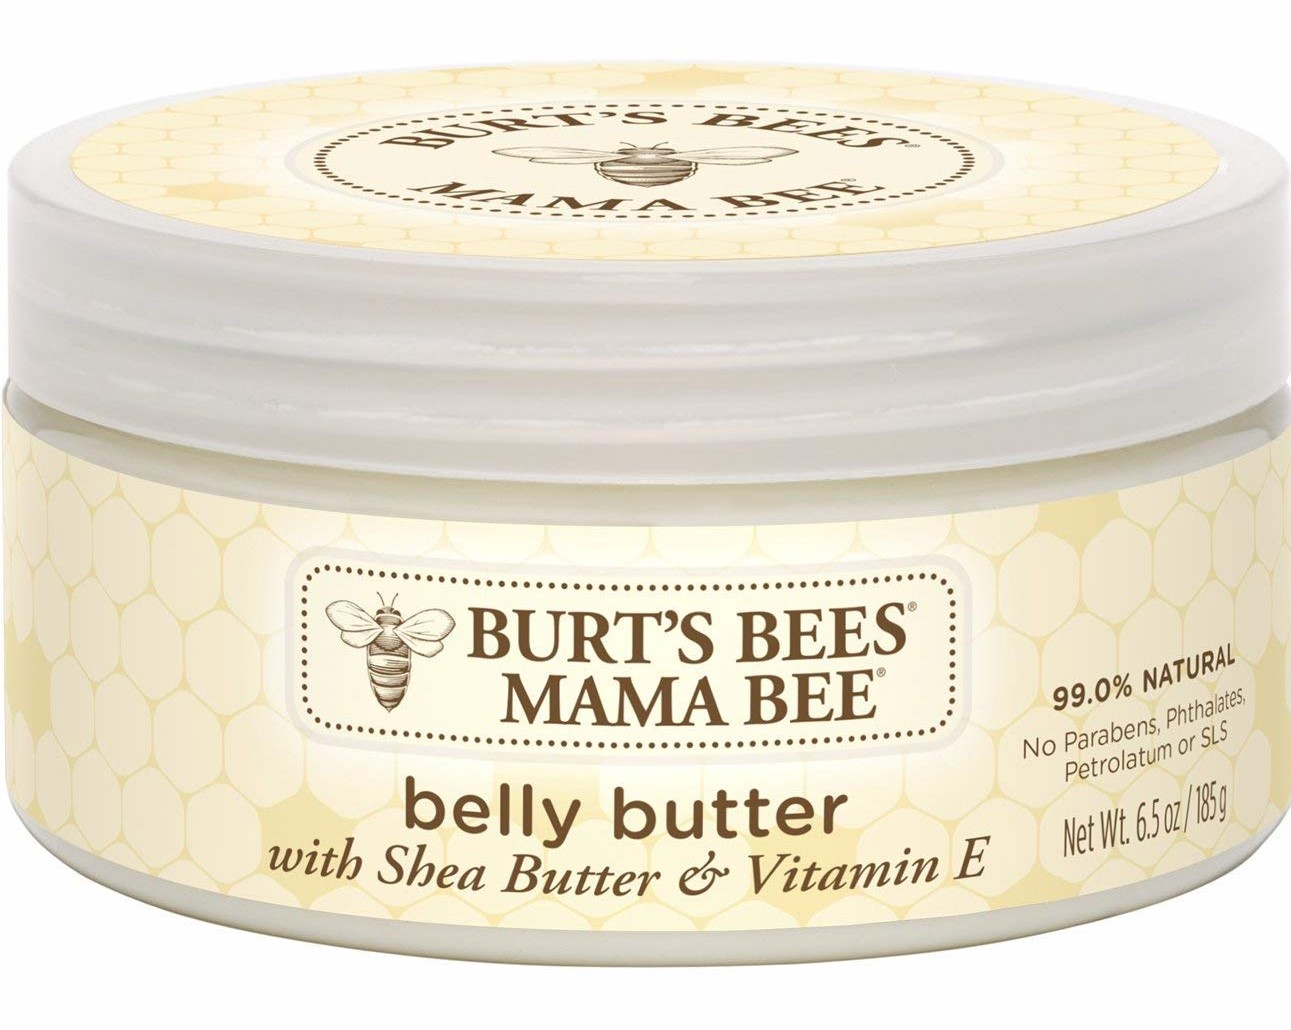 burt's bees mama bee stretch mark cream